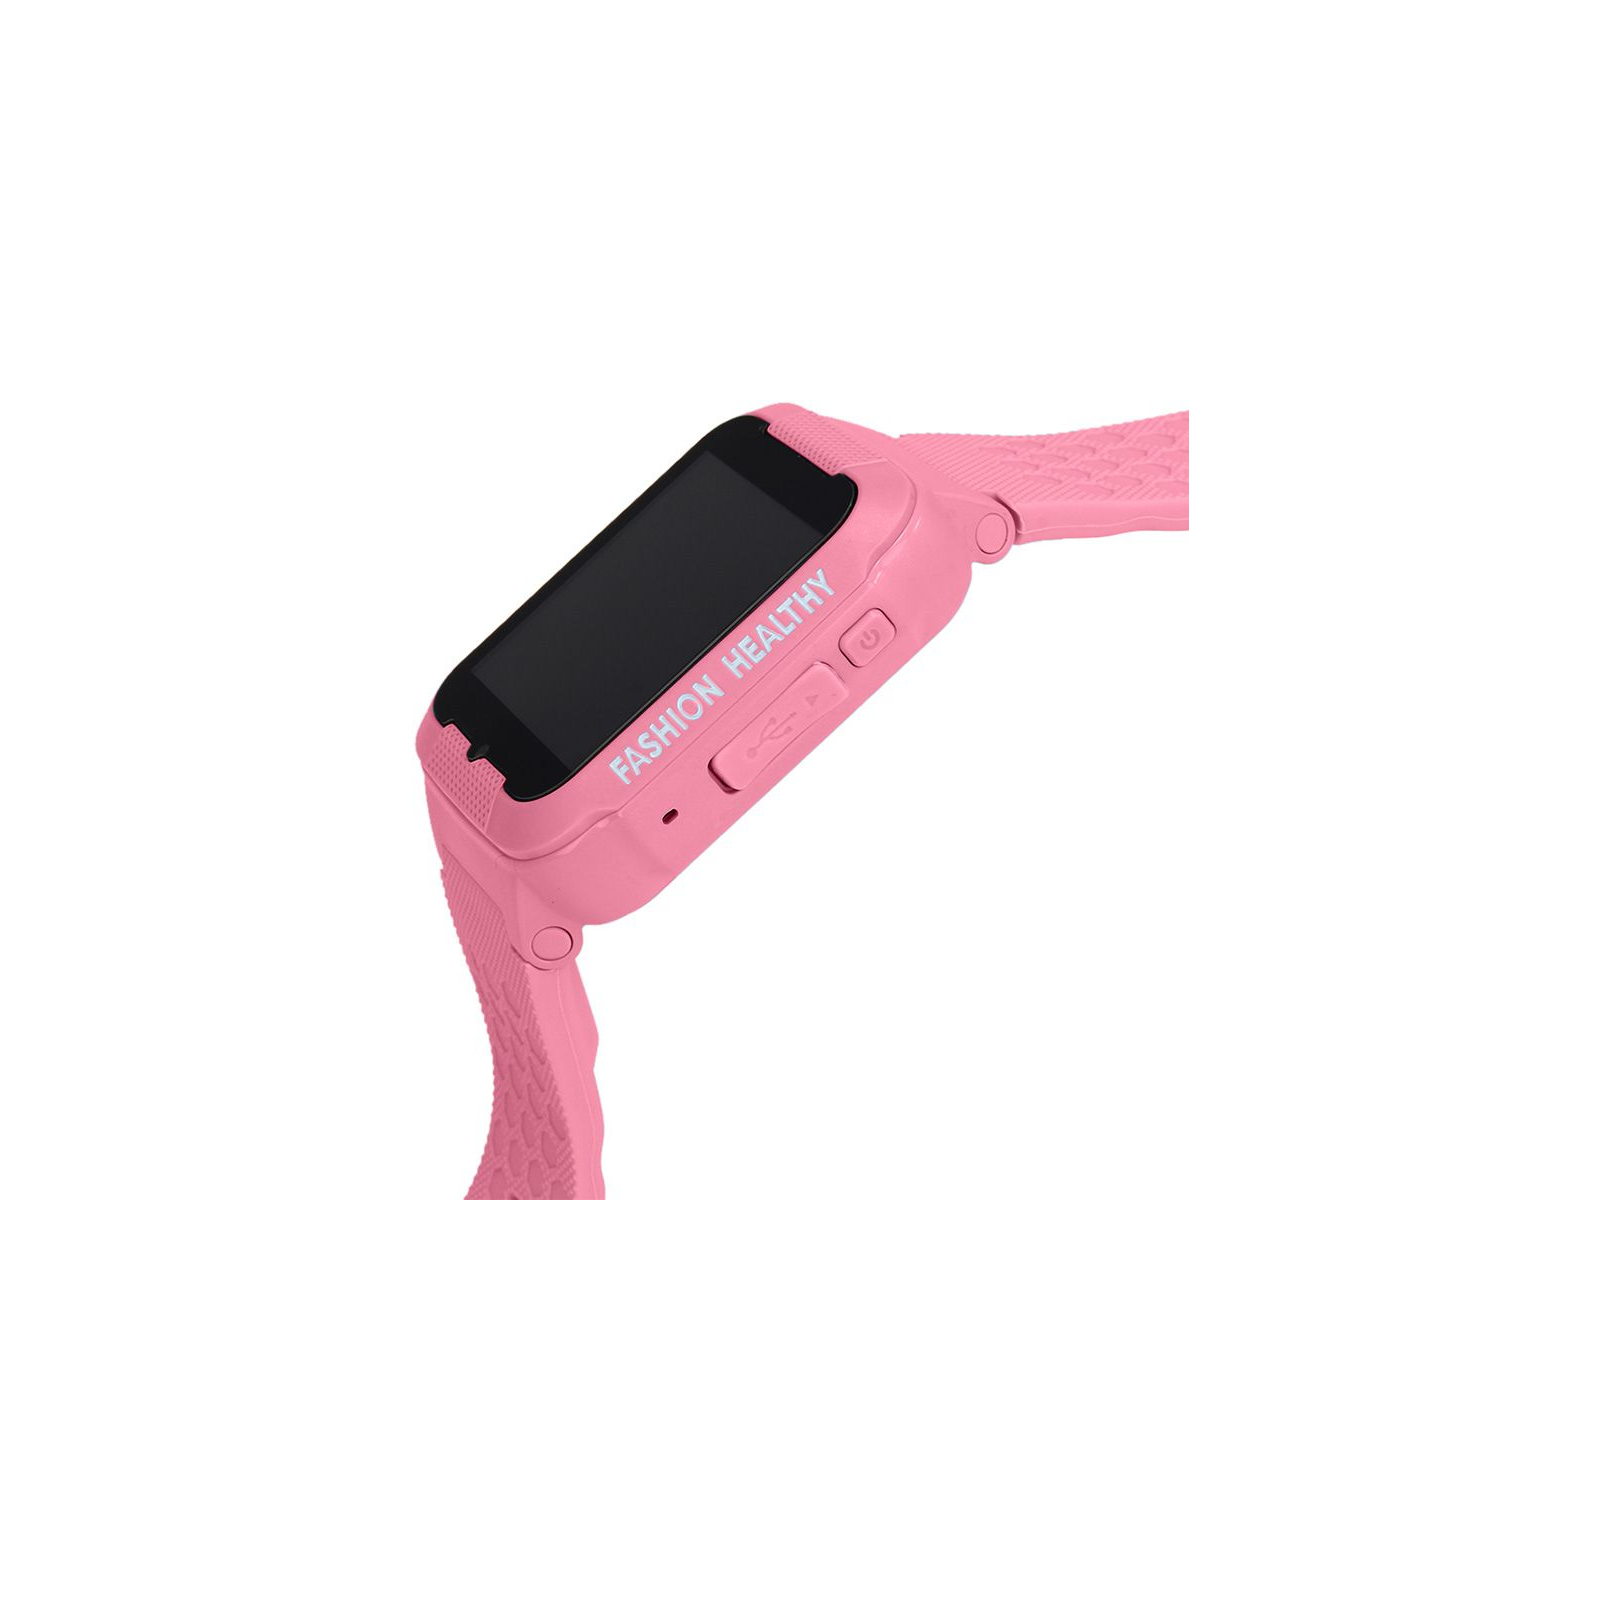 Смарт-часы UWatch K3 Kids waterproof smart watch Pink (F_51806) изображение 4